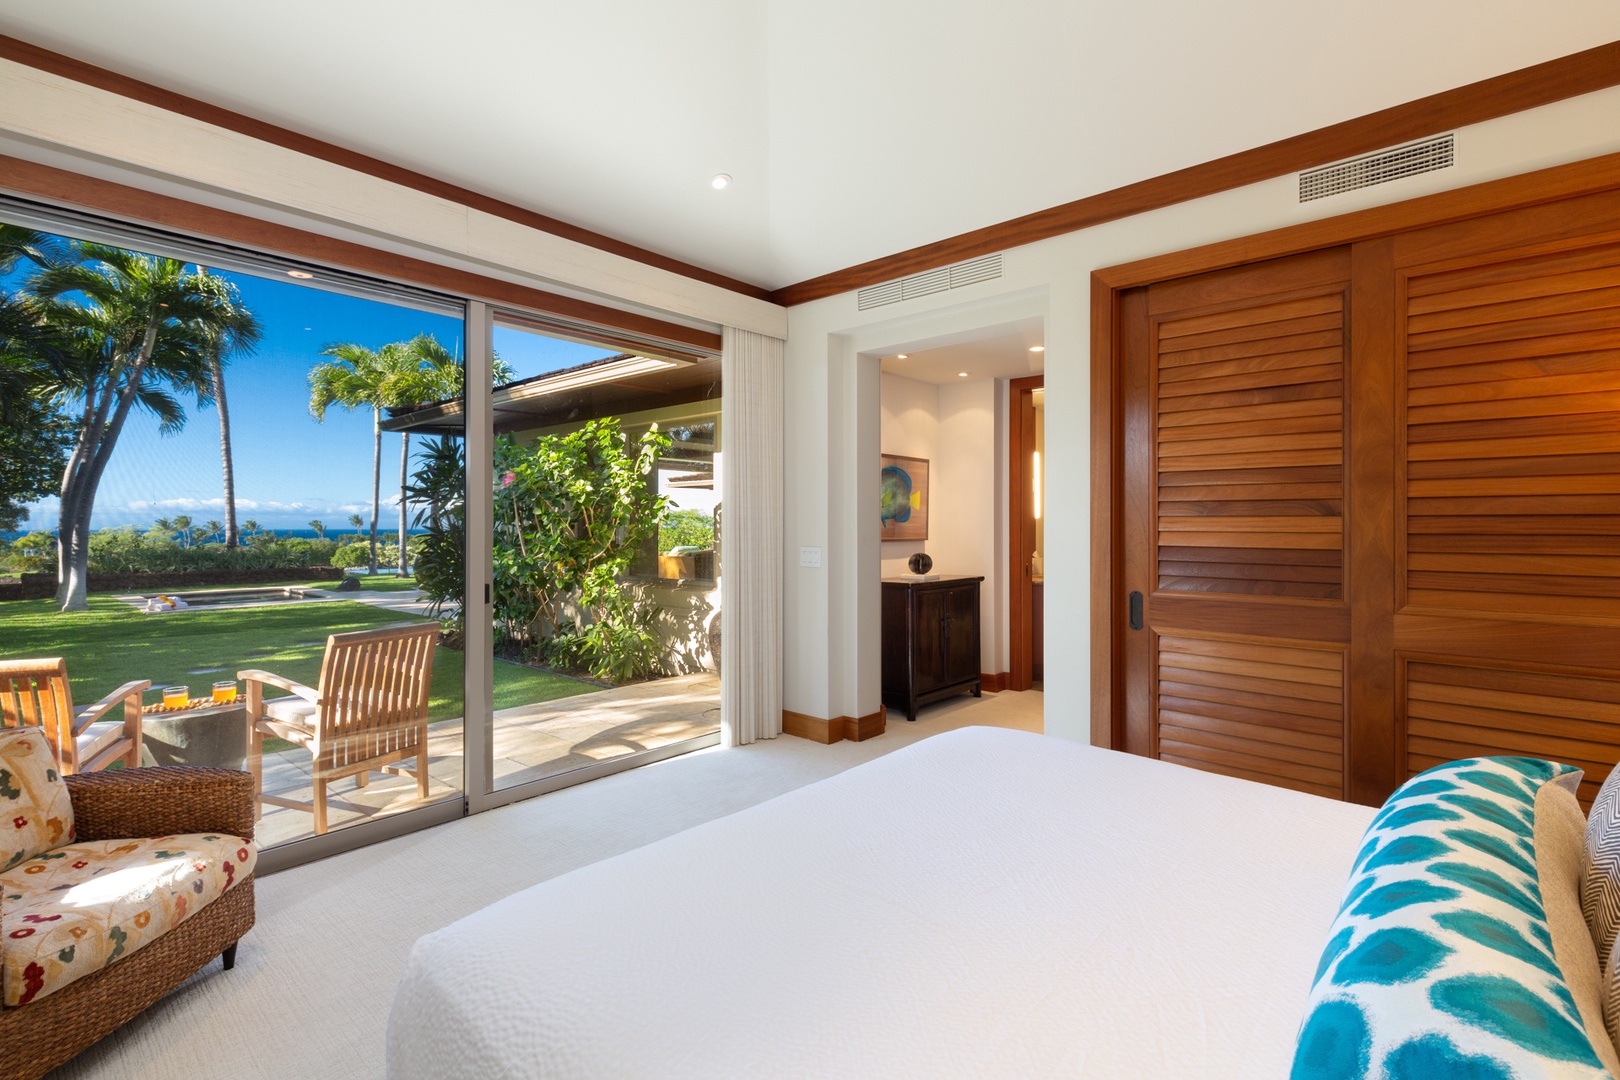 Kailua Kona Vacation Rentals, 4BD Hainoa Estate (102) at Four Seasons Resort at Hualalai - Second bedroom with a king bed, en suite bath, private lanai & ocean views